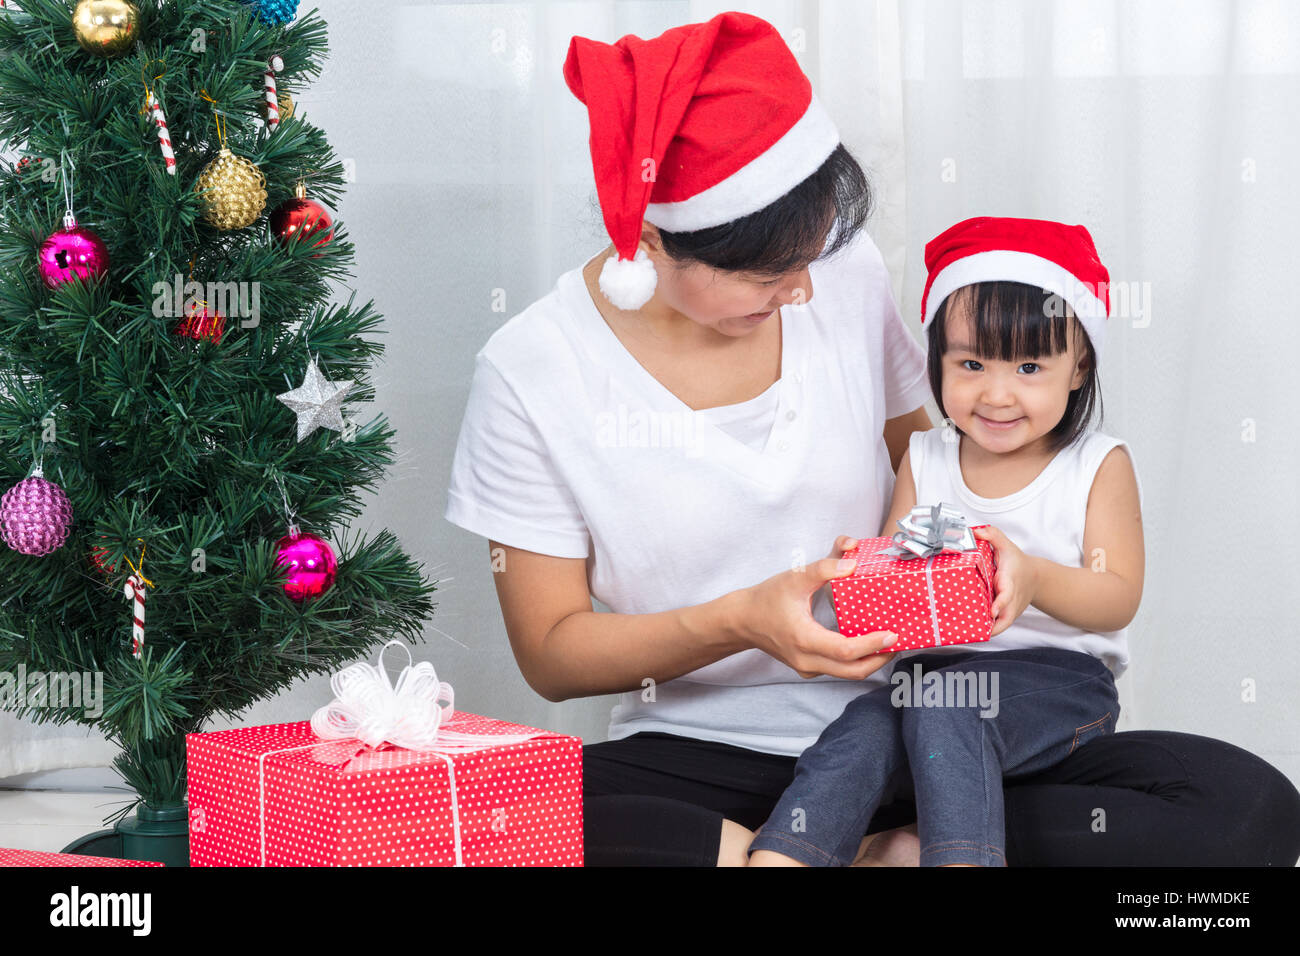 https://c8.alamy.com/comp/HWMDKE/asian-chinese-mother-and-daughter-sitting-next-to-christmas-tree-to-HWMDKE.jpg